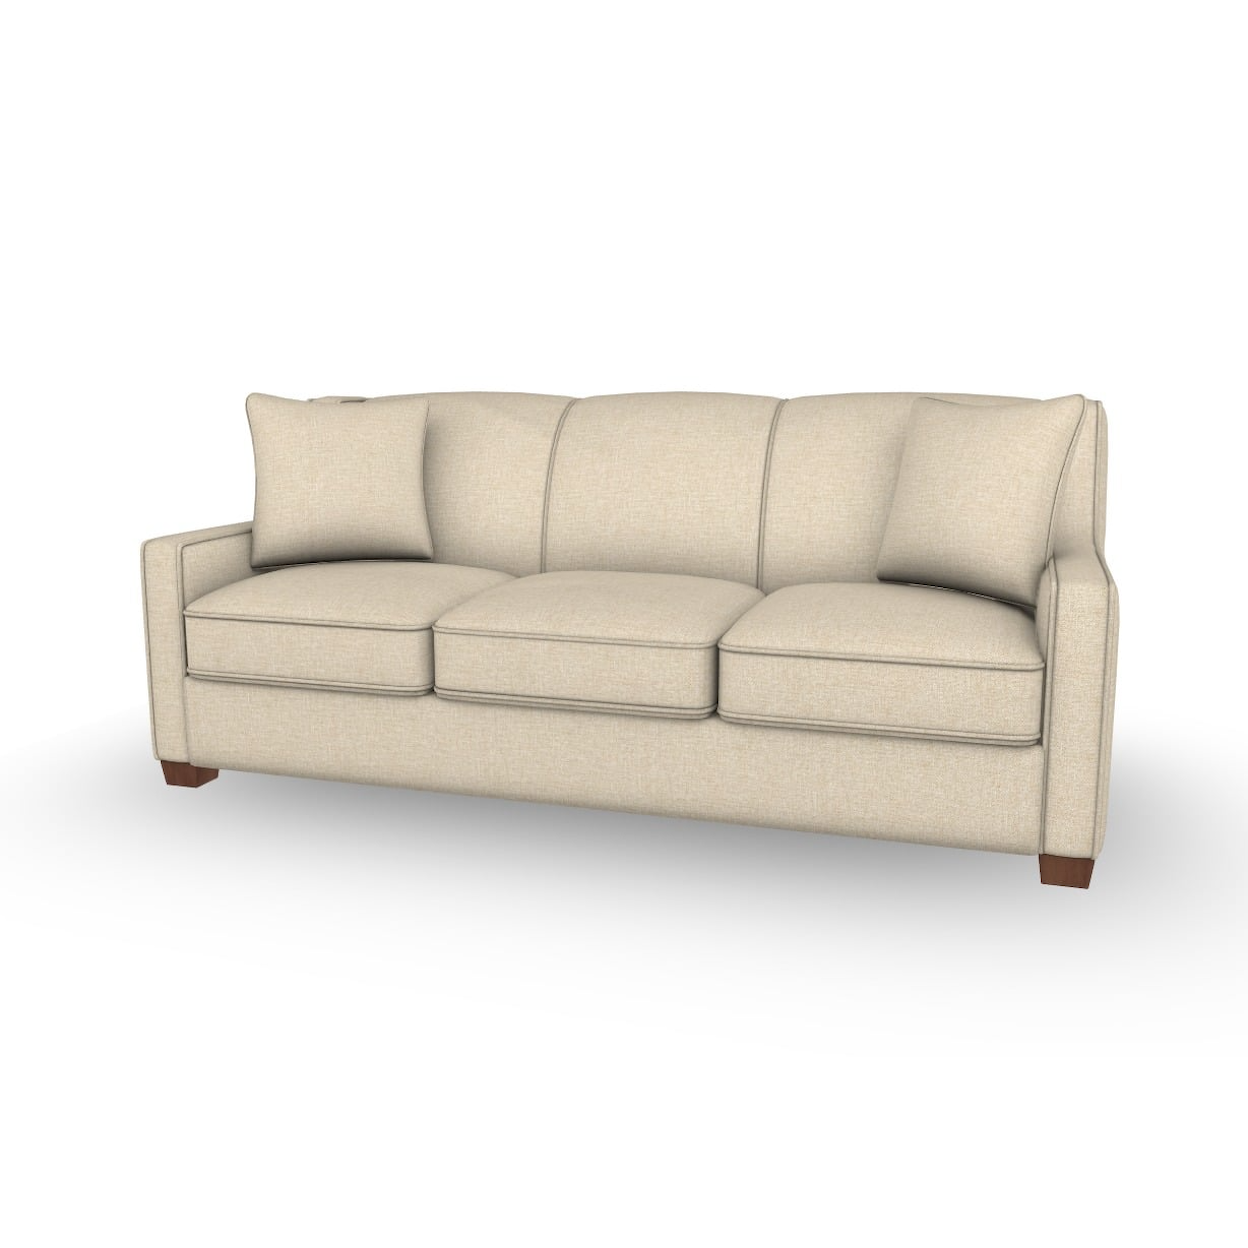 Bravo Furniture Marinette Full Stationary Memory Foam Sleeper Sofa